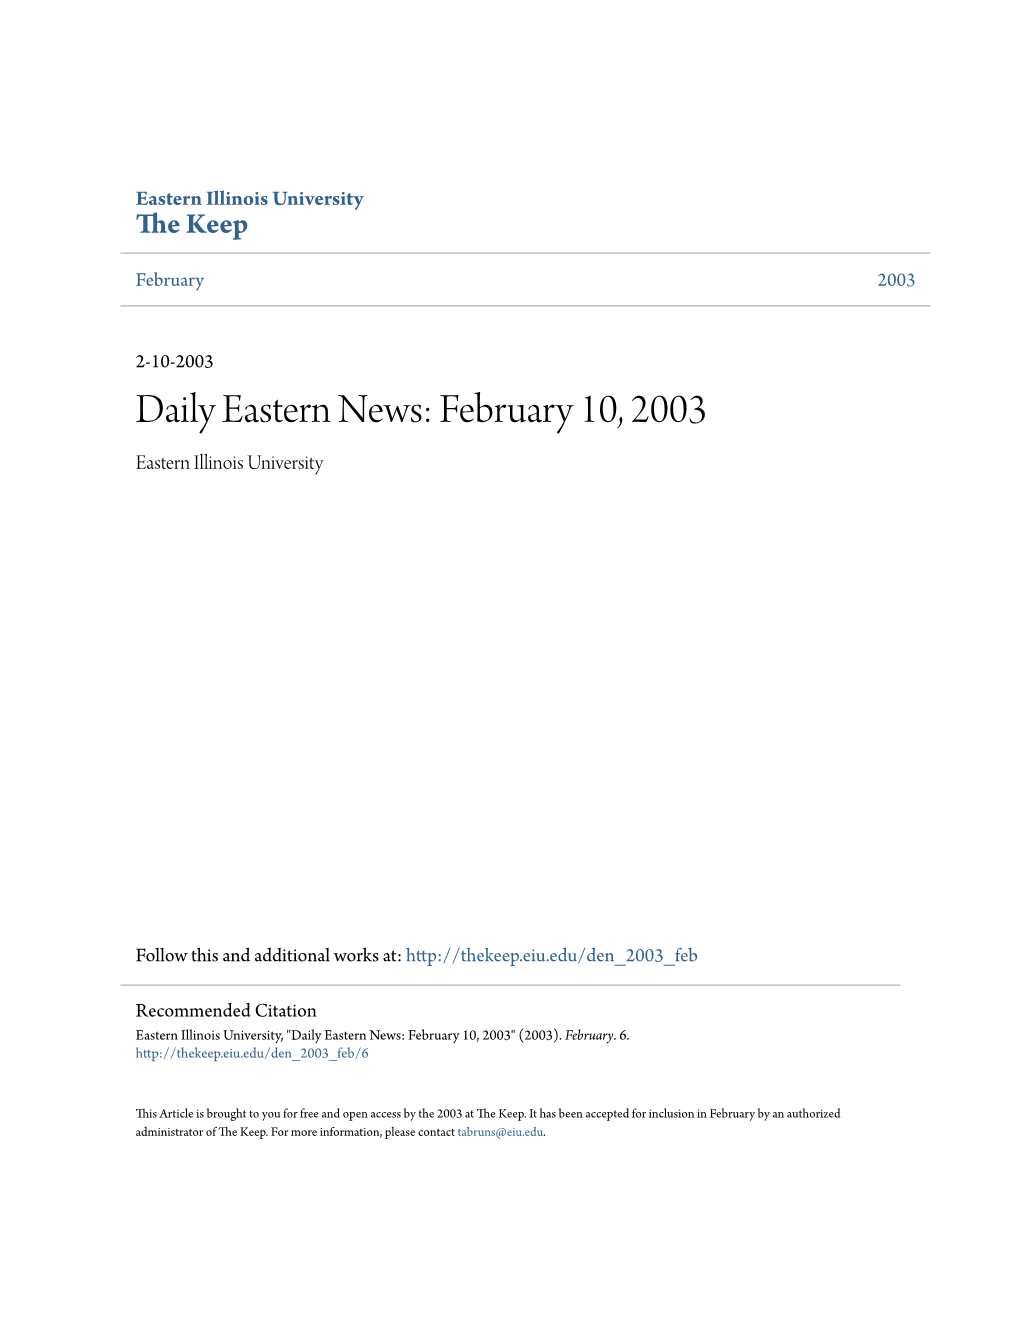 Daily Eastern News: February 10, 2003 Eastern Illinois University